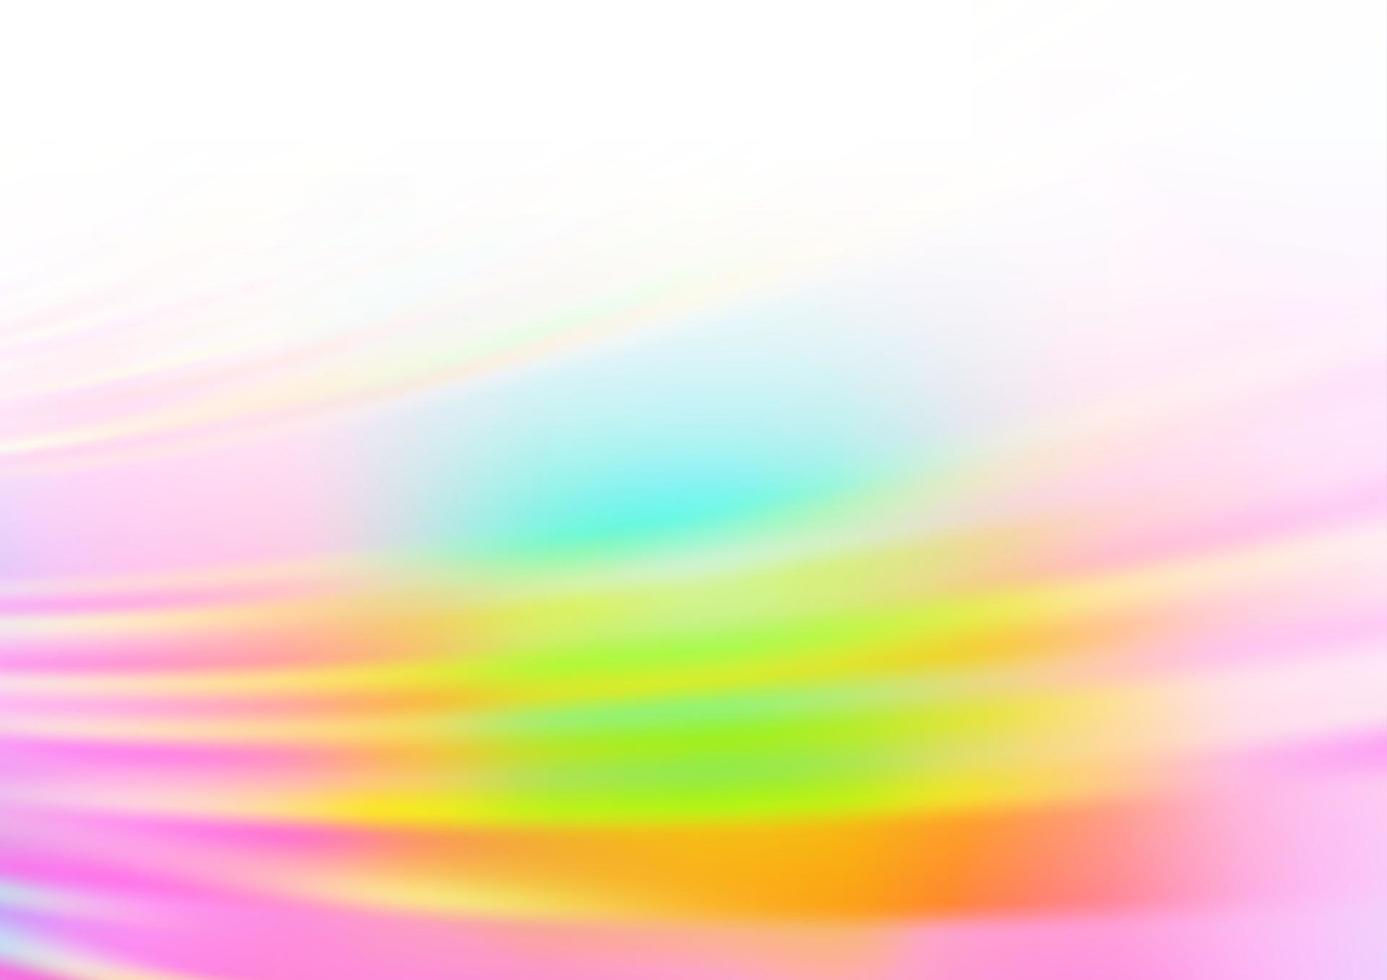 ljus mångfärgad, regnbåge vektor suddig ljus mall.